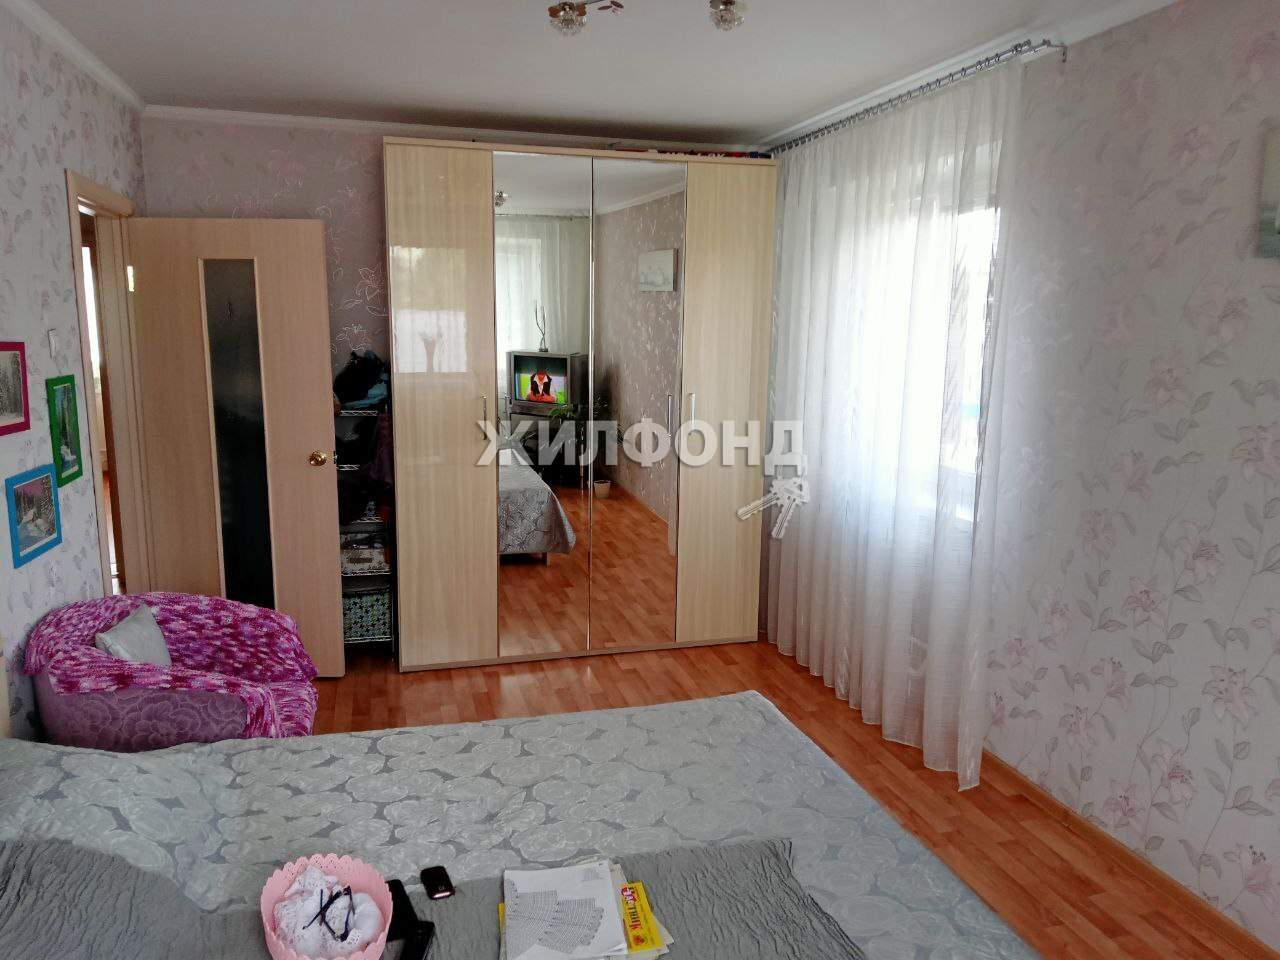 Продажа 3-комнатной квартиры, Междуреченск, Пушкина улица,  д.37